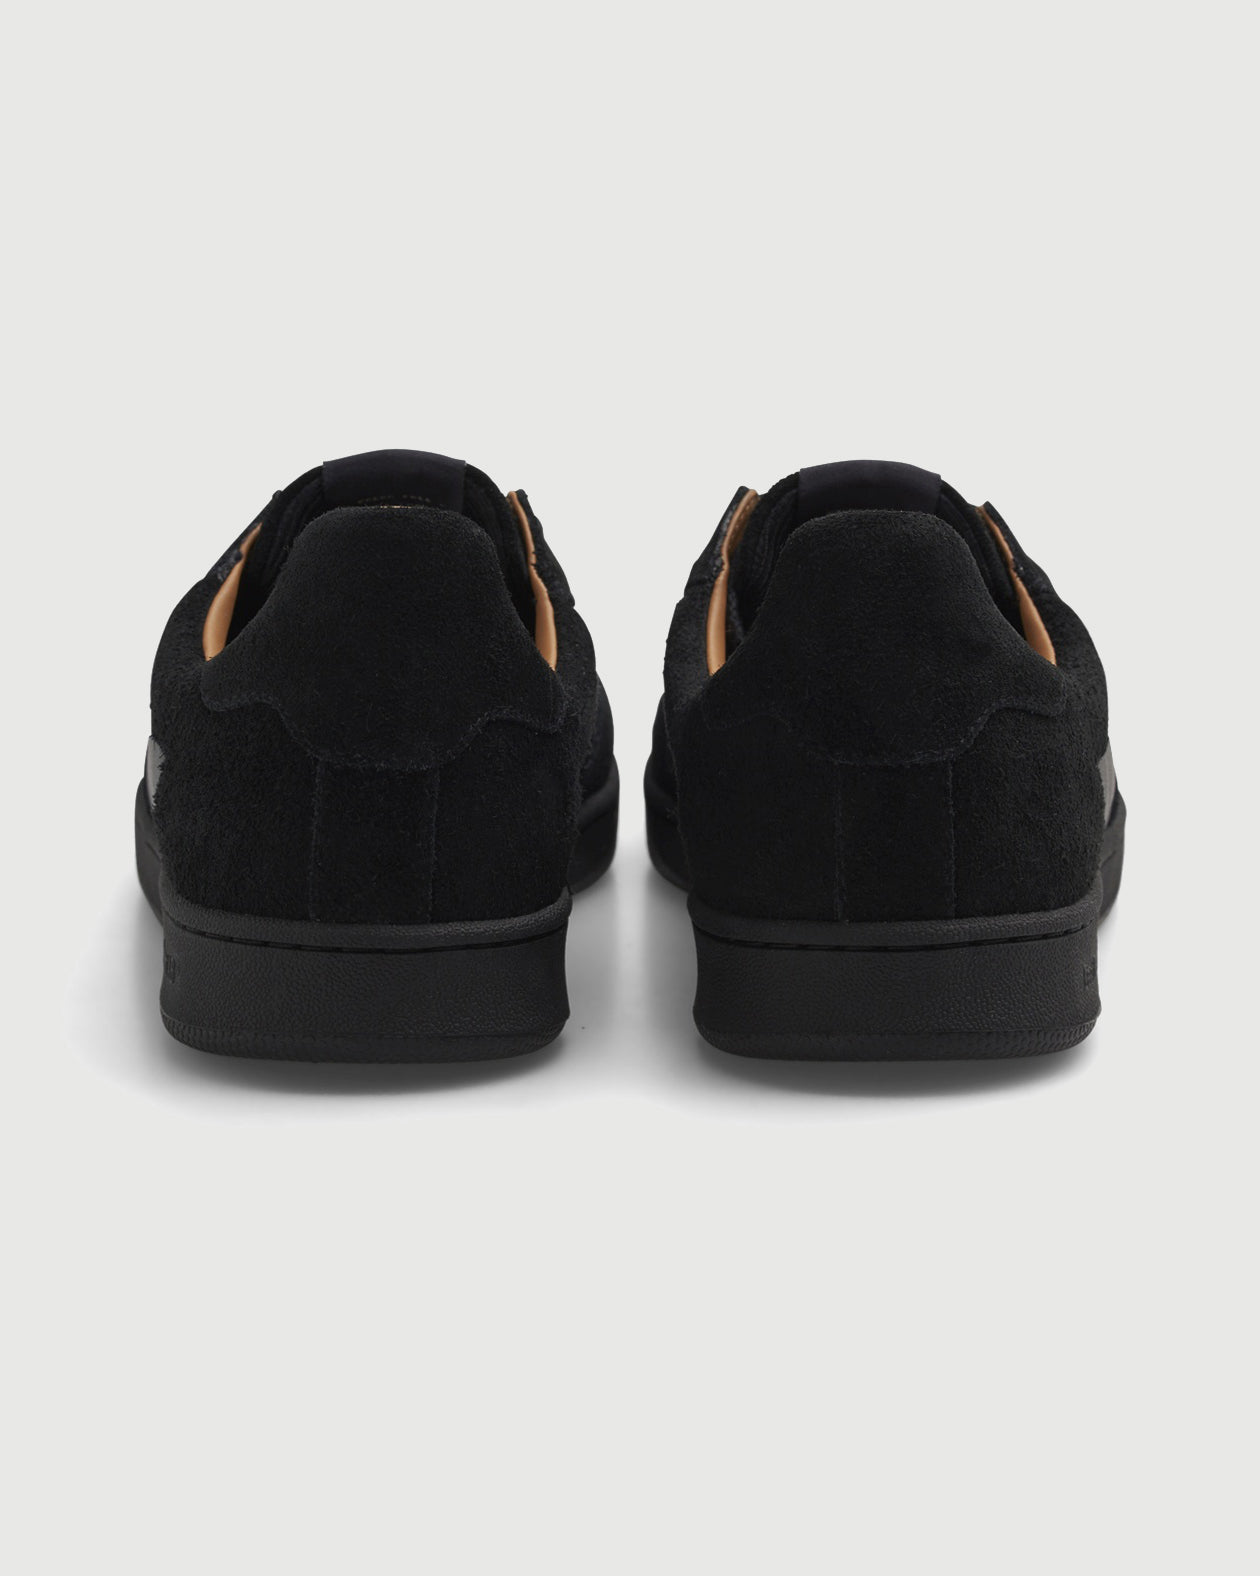 Last Resort AB CM001 Suede/Leather Lo (Black/Black) Shoes Sneakers Unisex